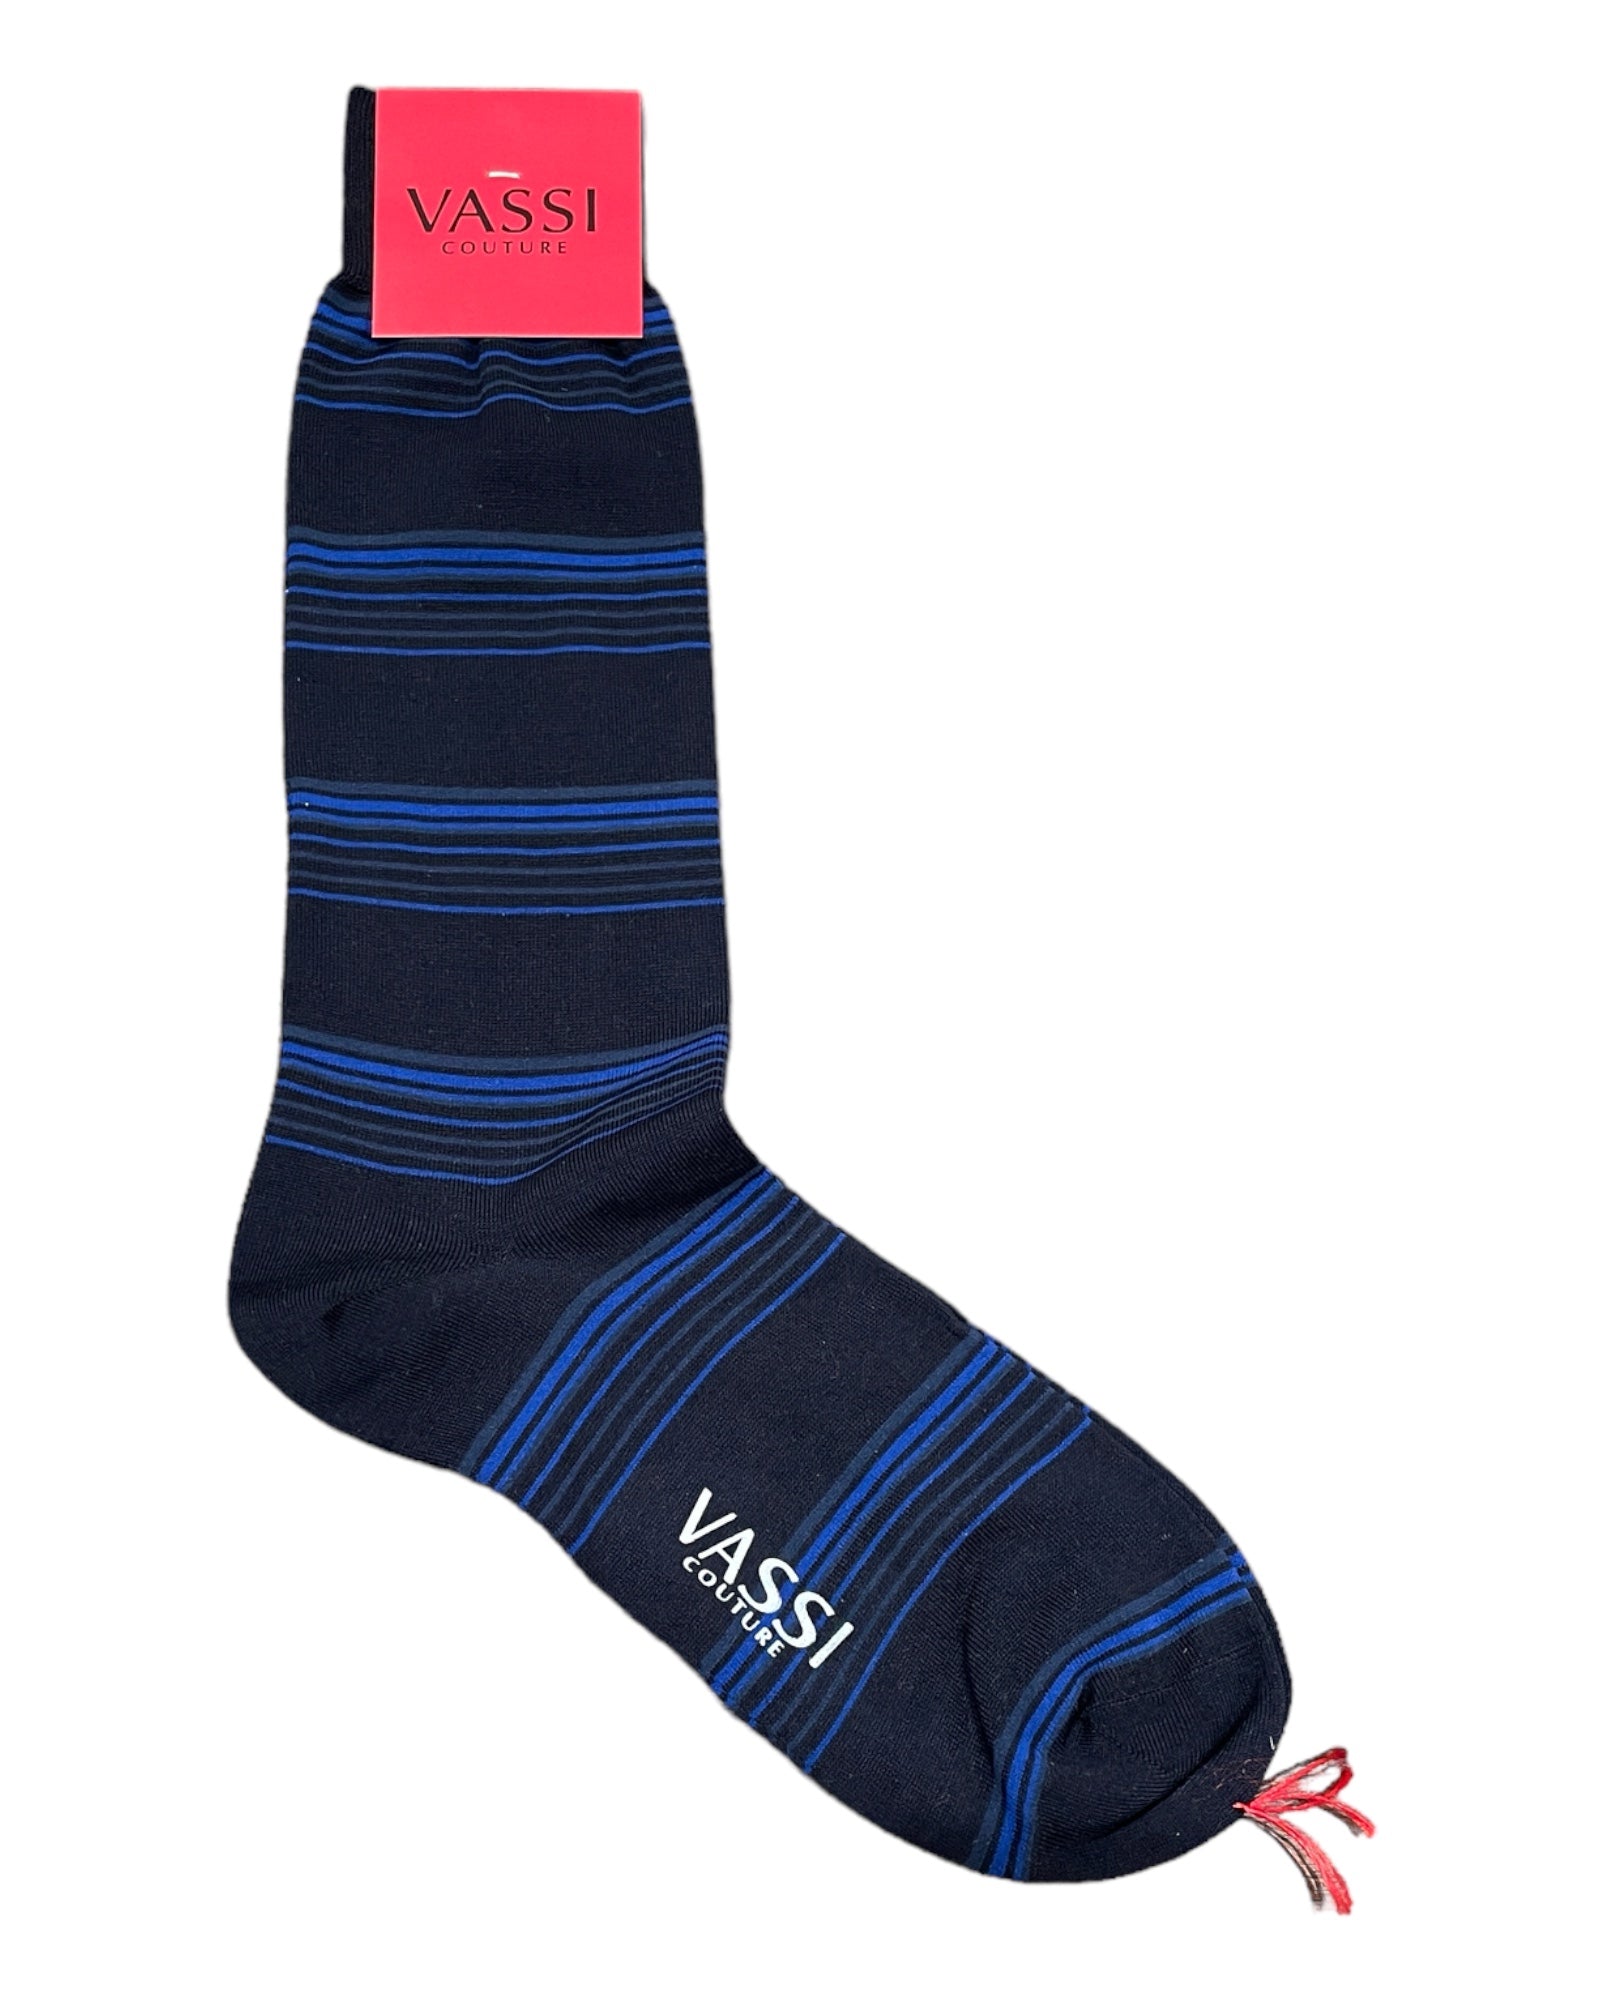 Navy with Blue Horizontal Stripes Socks